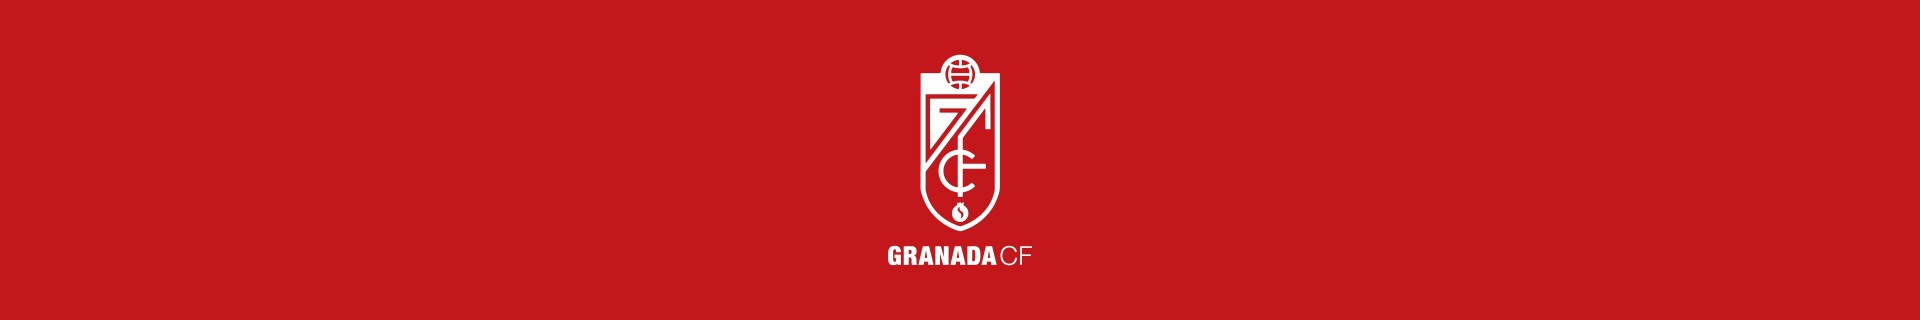 Calcetines Granada CF